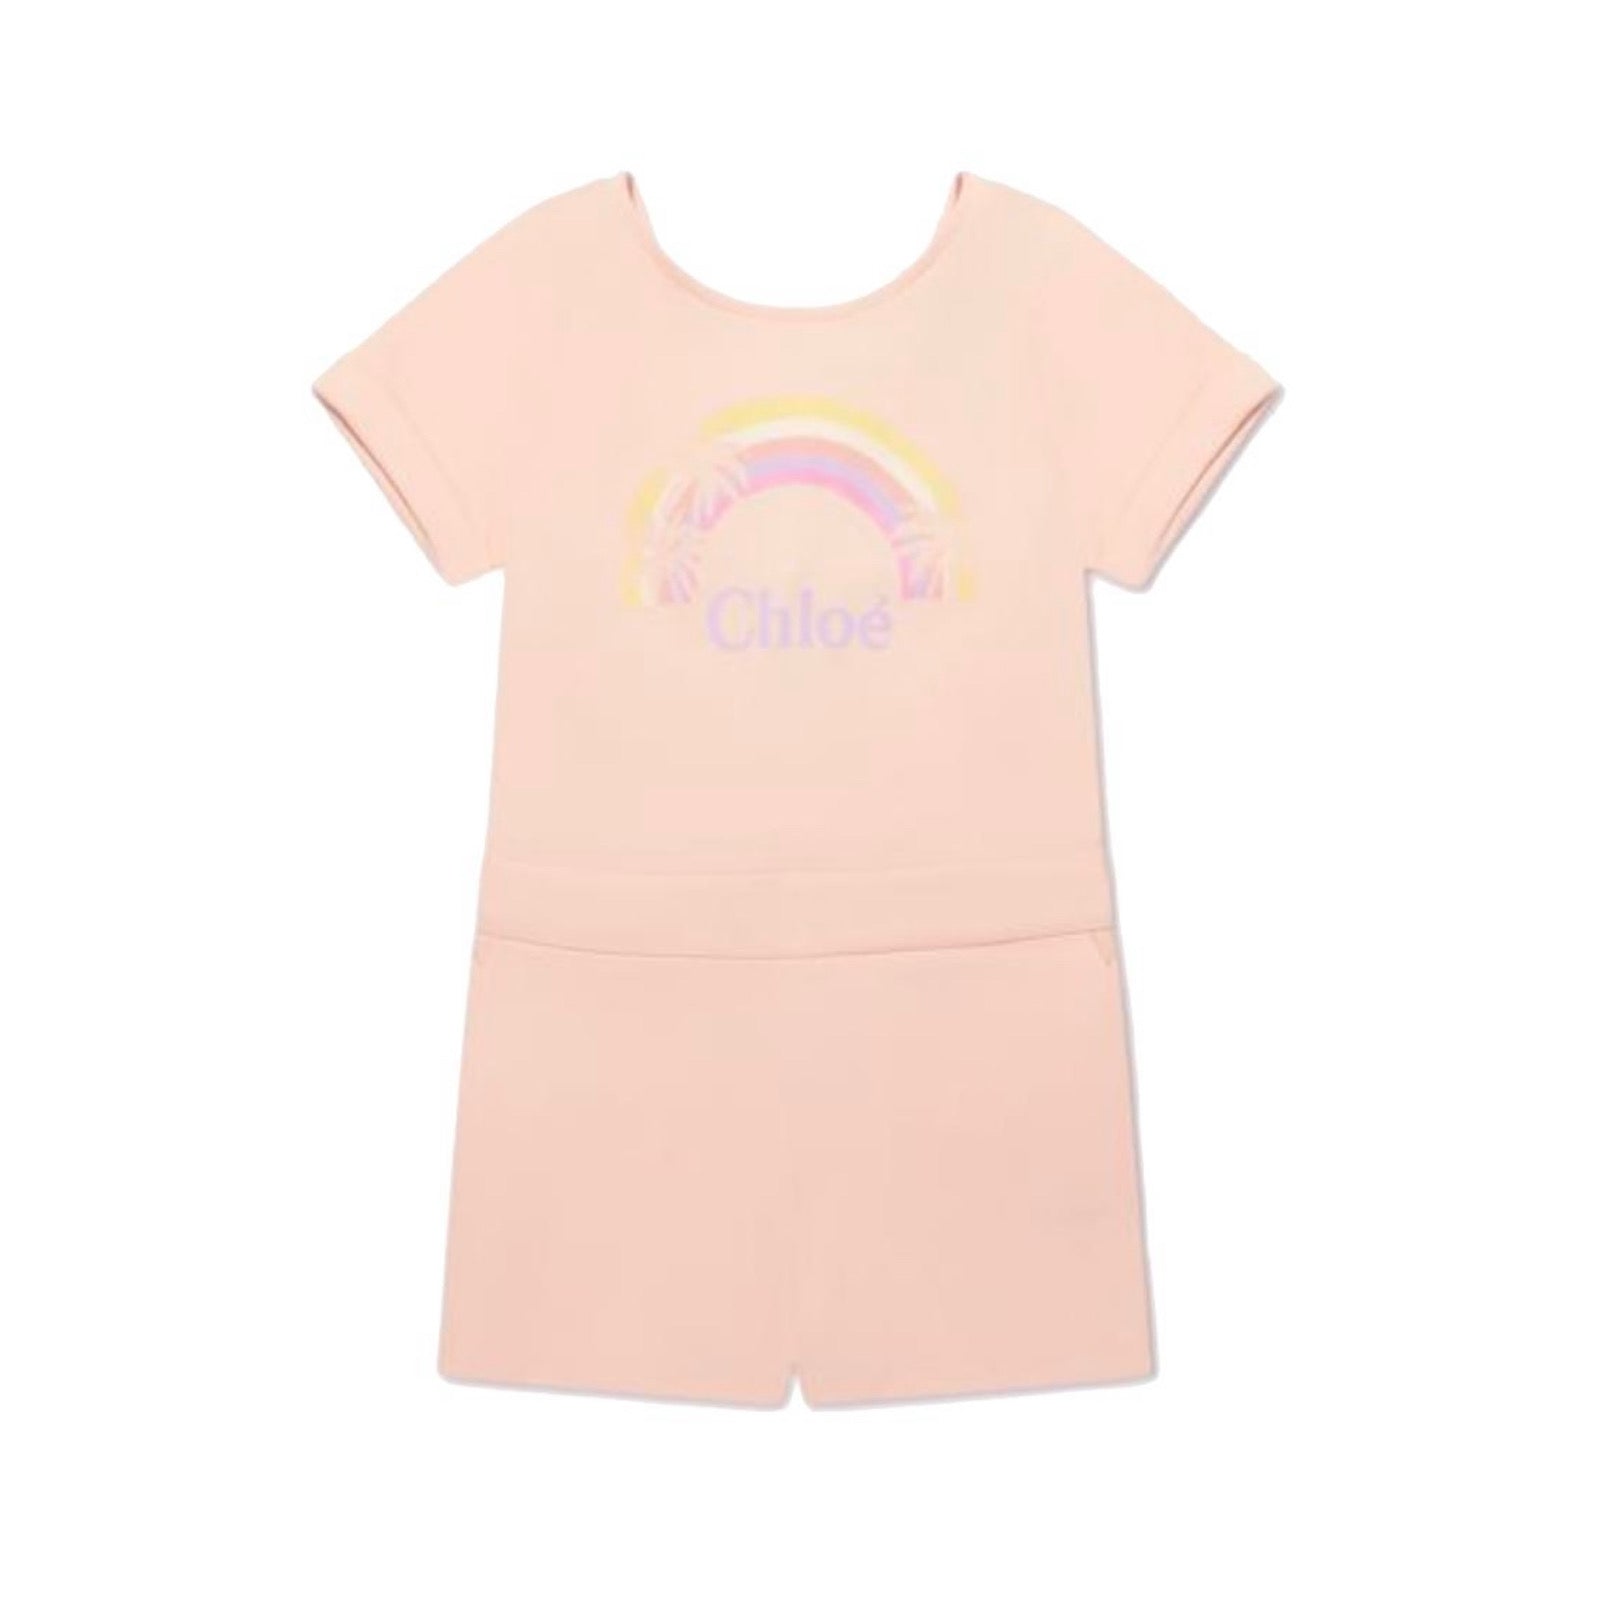 Chloe Girls Peach Rainbow Playsuit